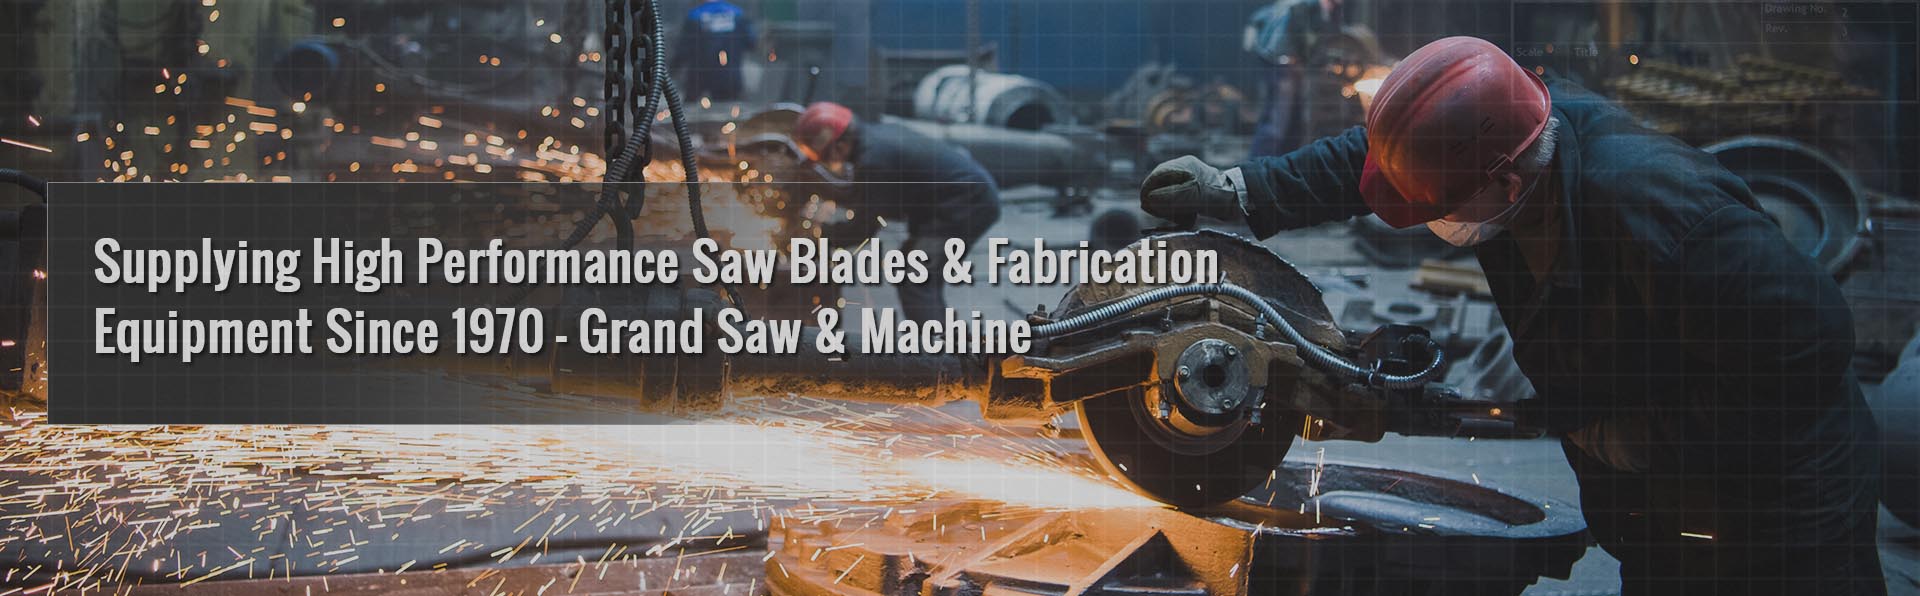 Grand Saw & Machine Header Slide